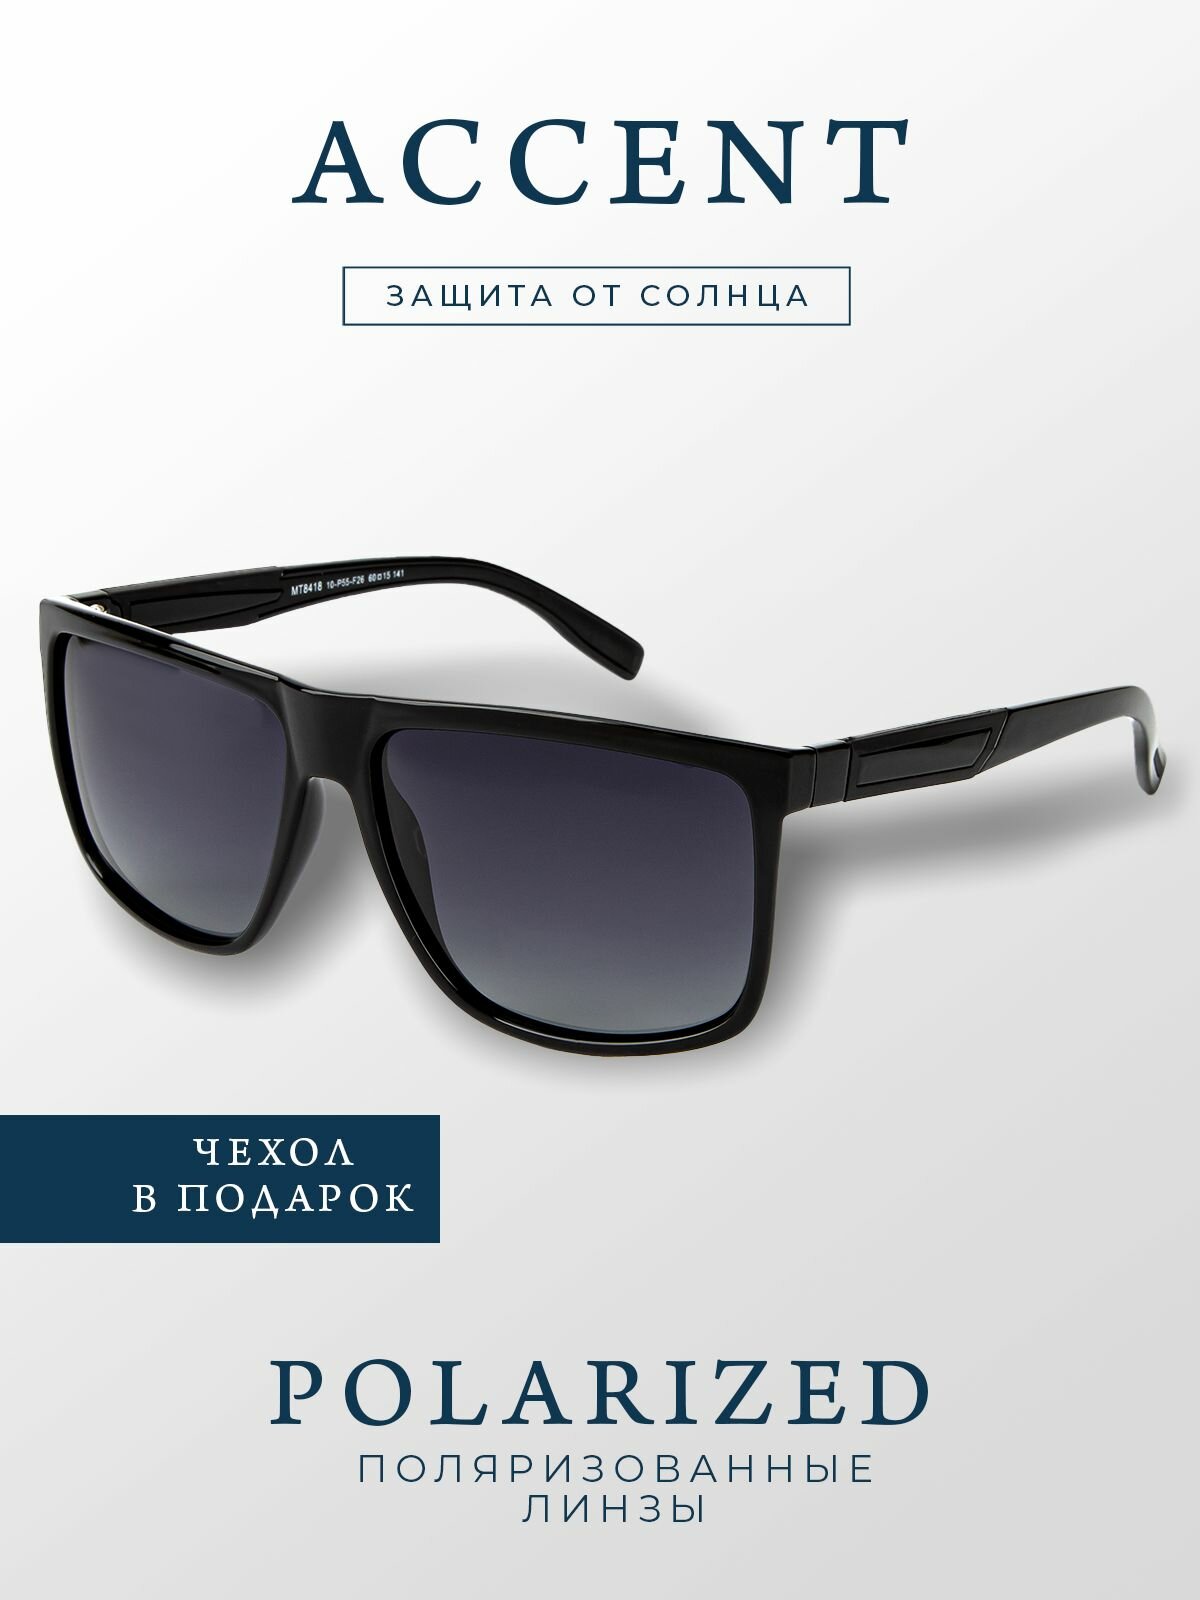 Солнцезащитные очки Accent Polarized